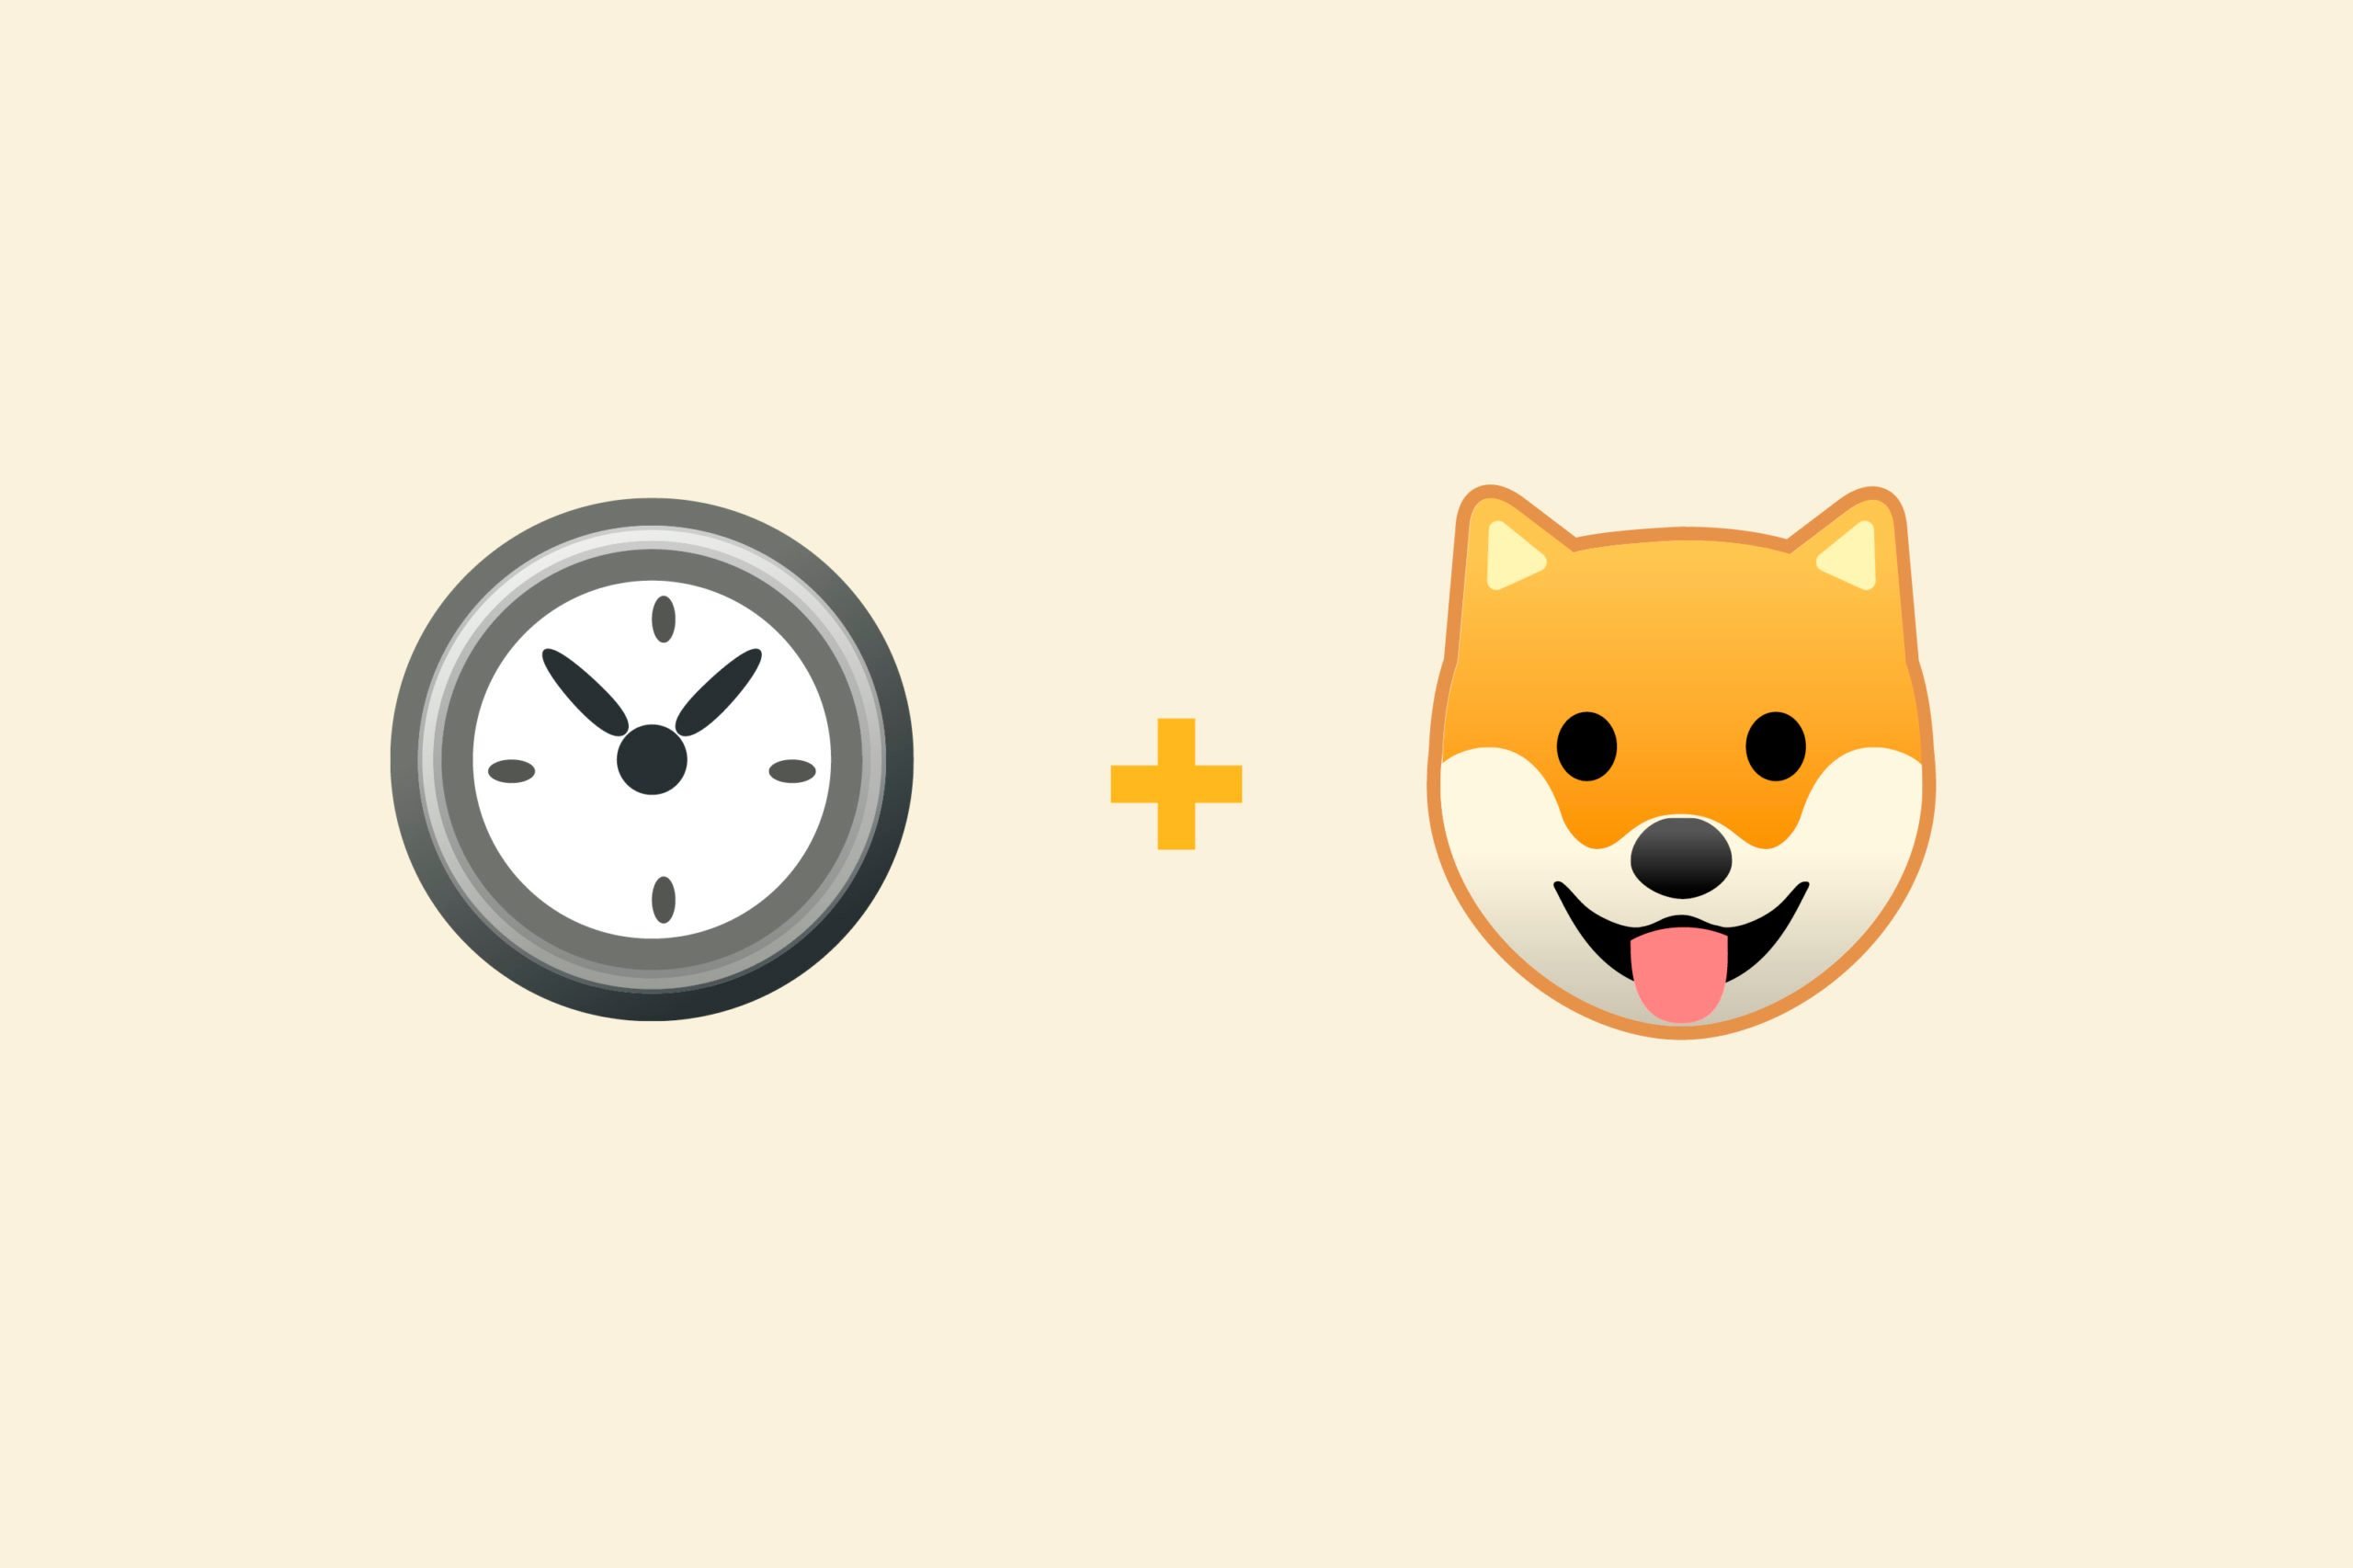 Watch emoji + dog emoji